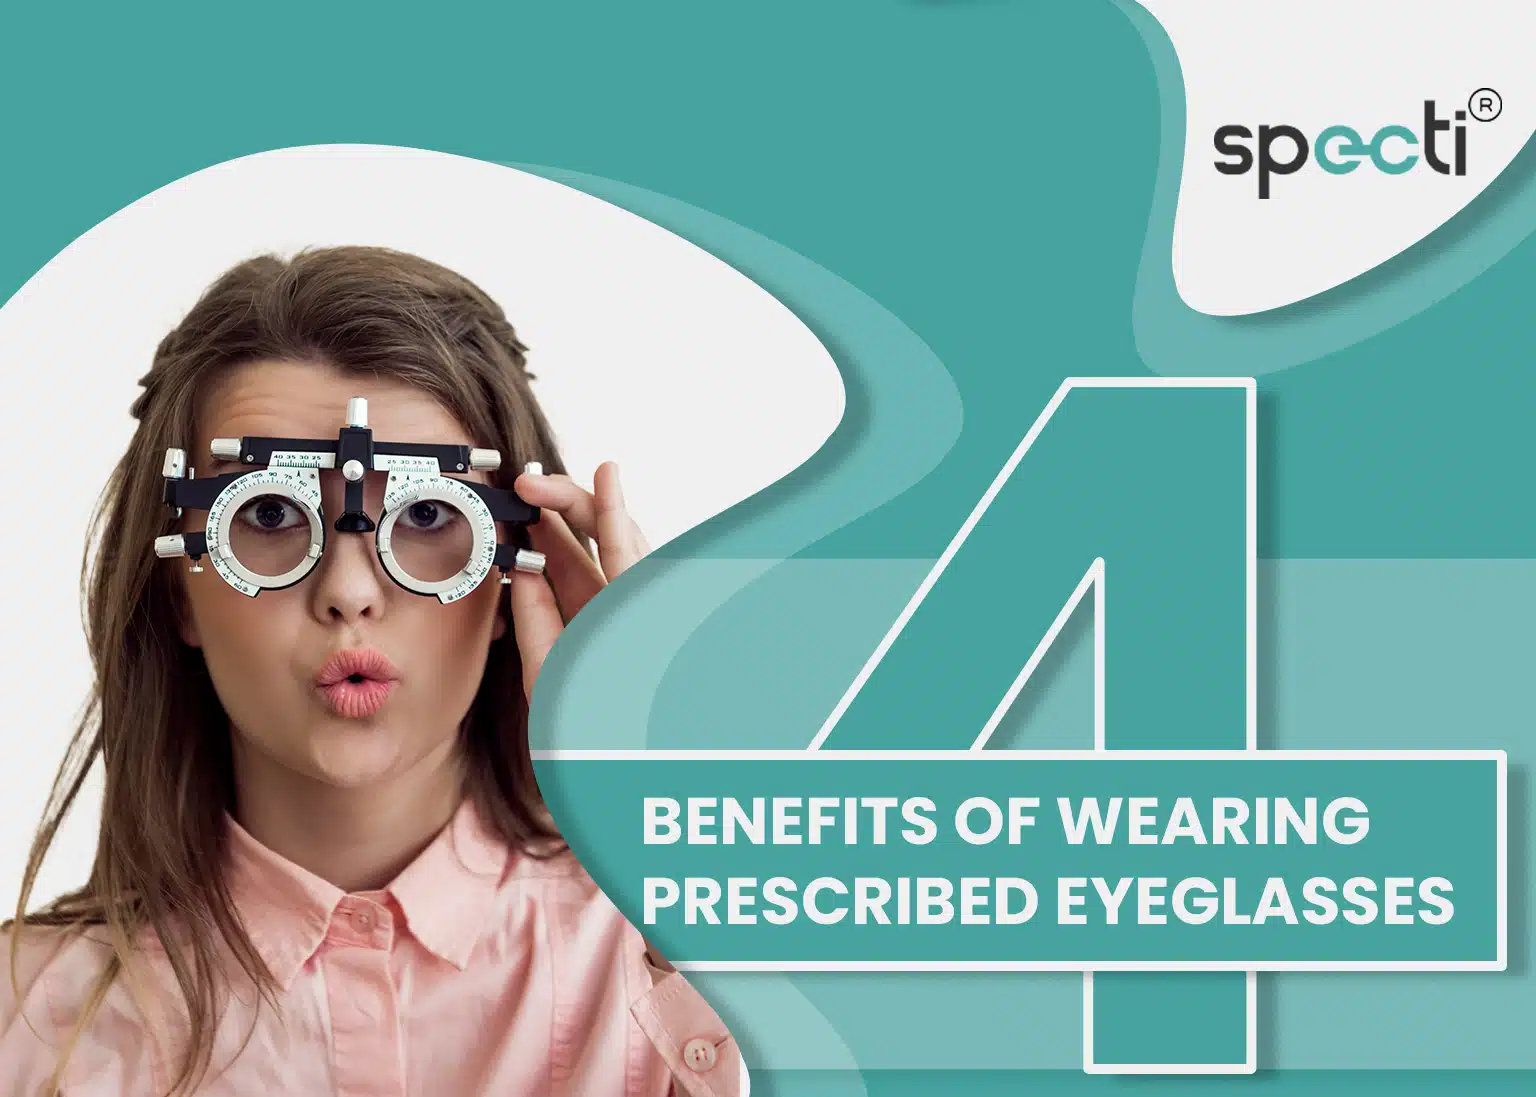 4 benefits of wearing prescribed eyeglasses